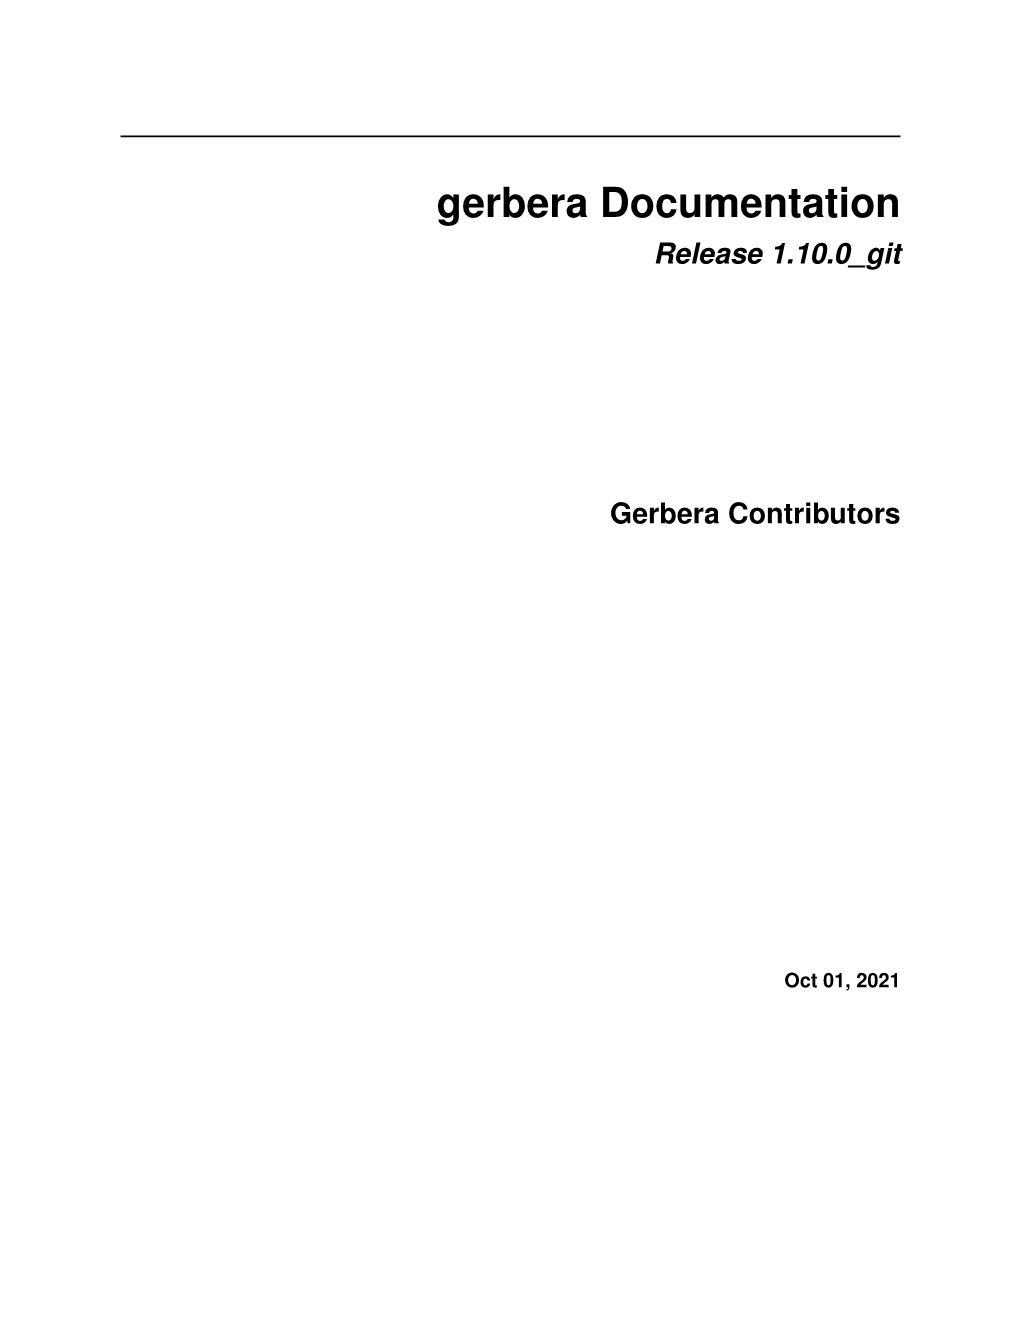 Gerbera Documentation Release 1.10.0 Git